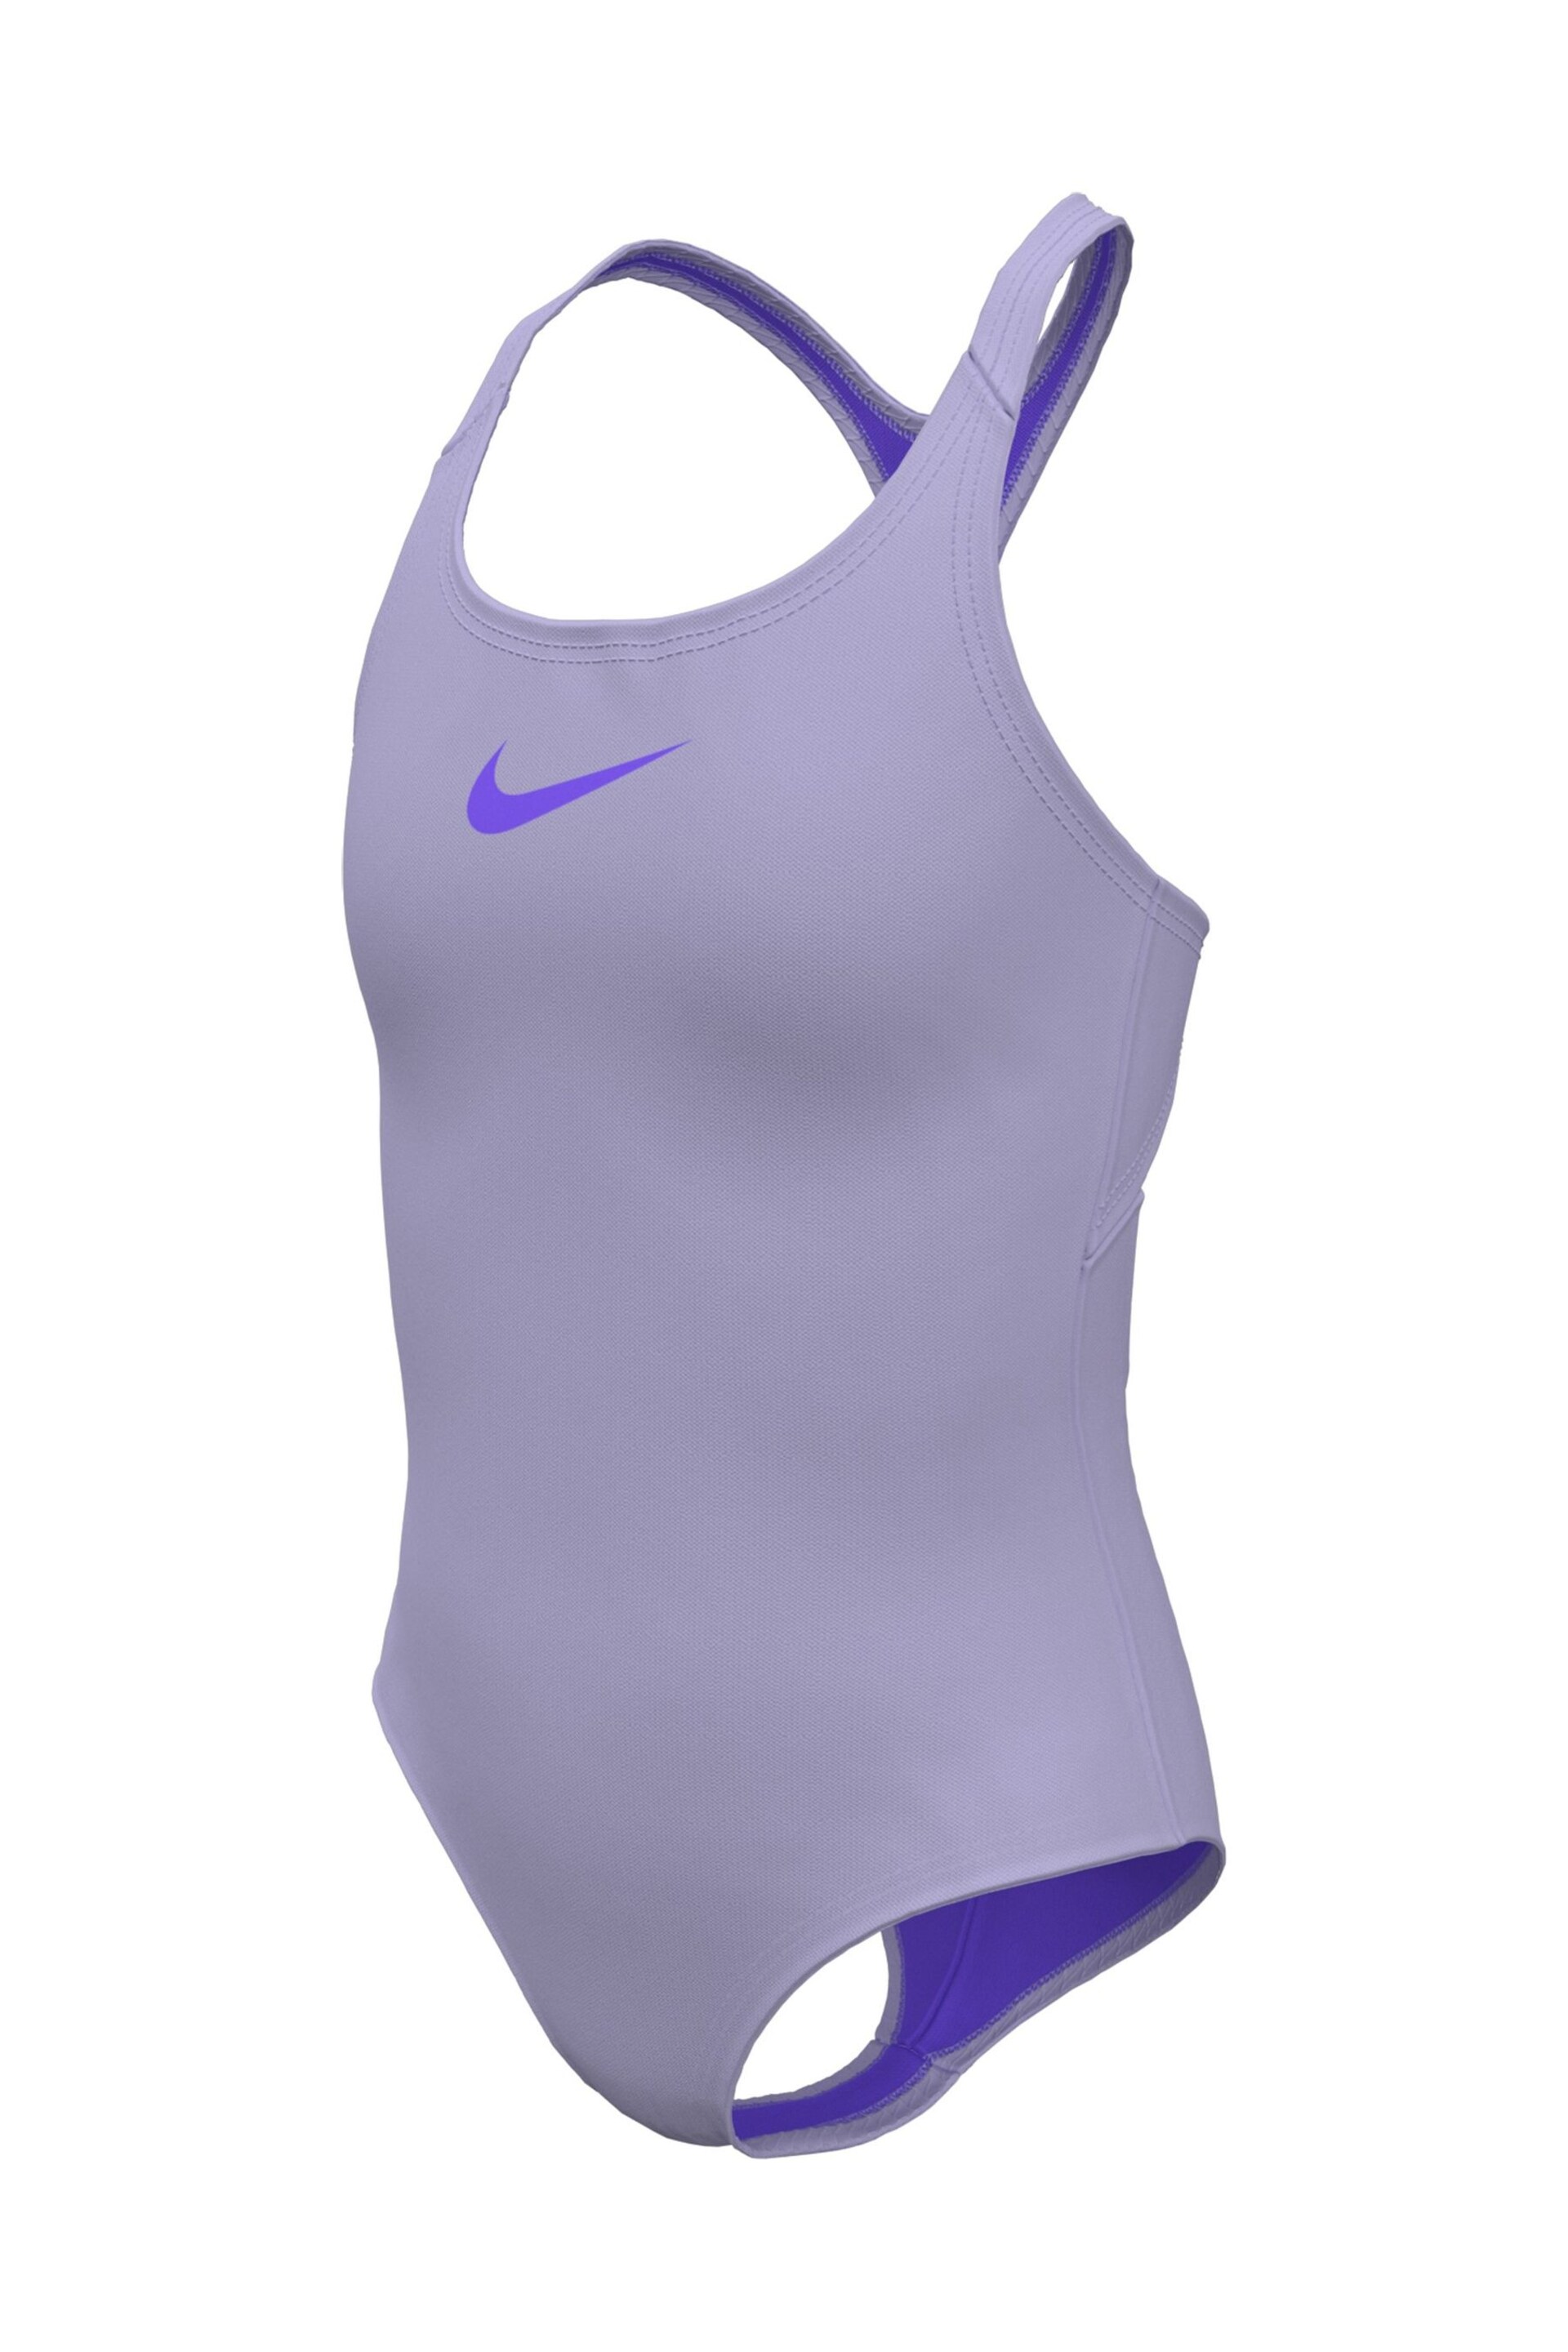 Nike Purple Essential Racerback Swimsuit - Image 4 of 5